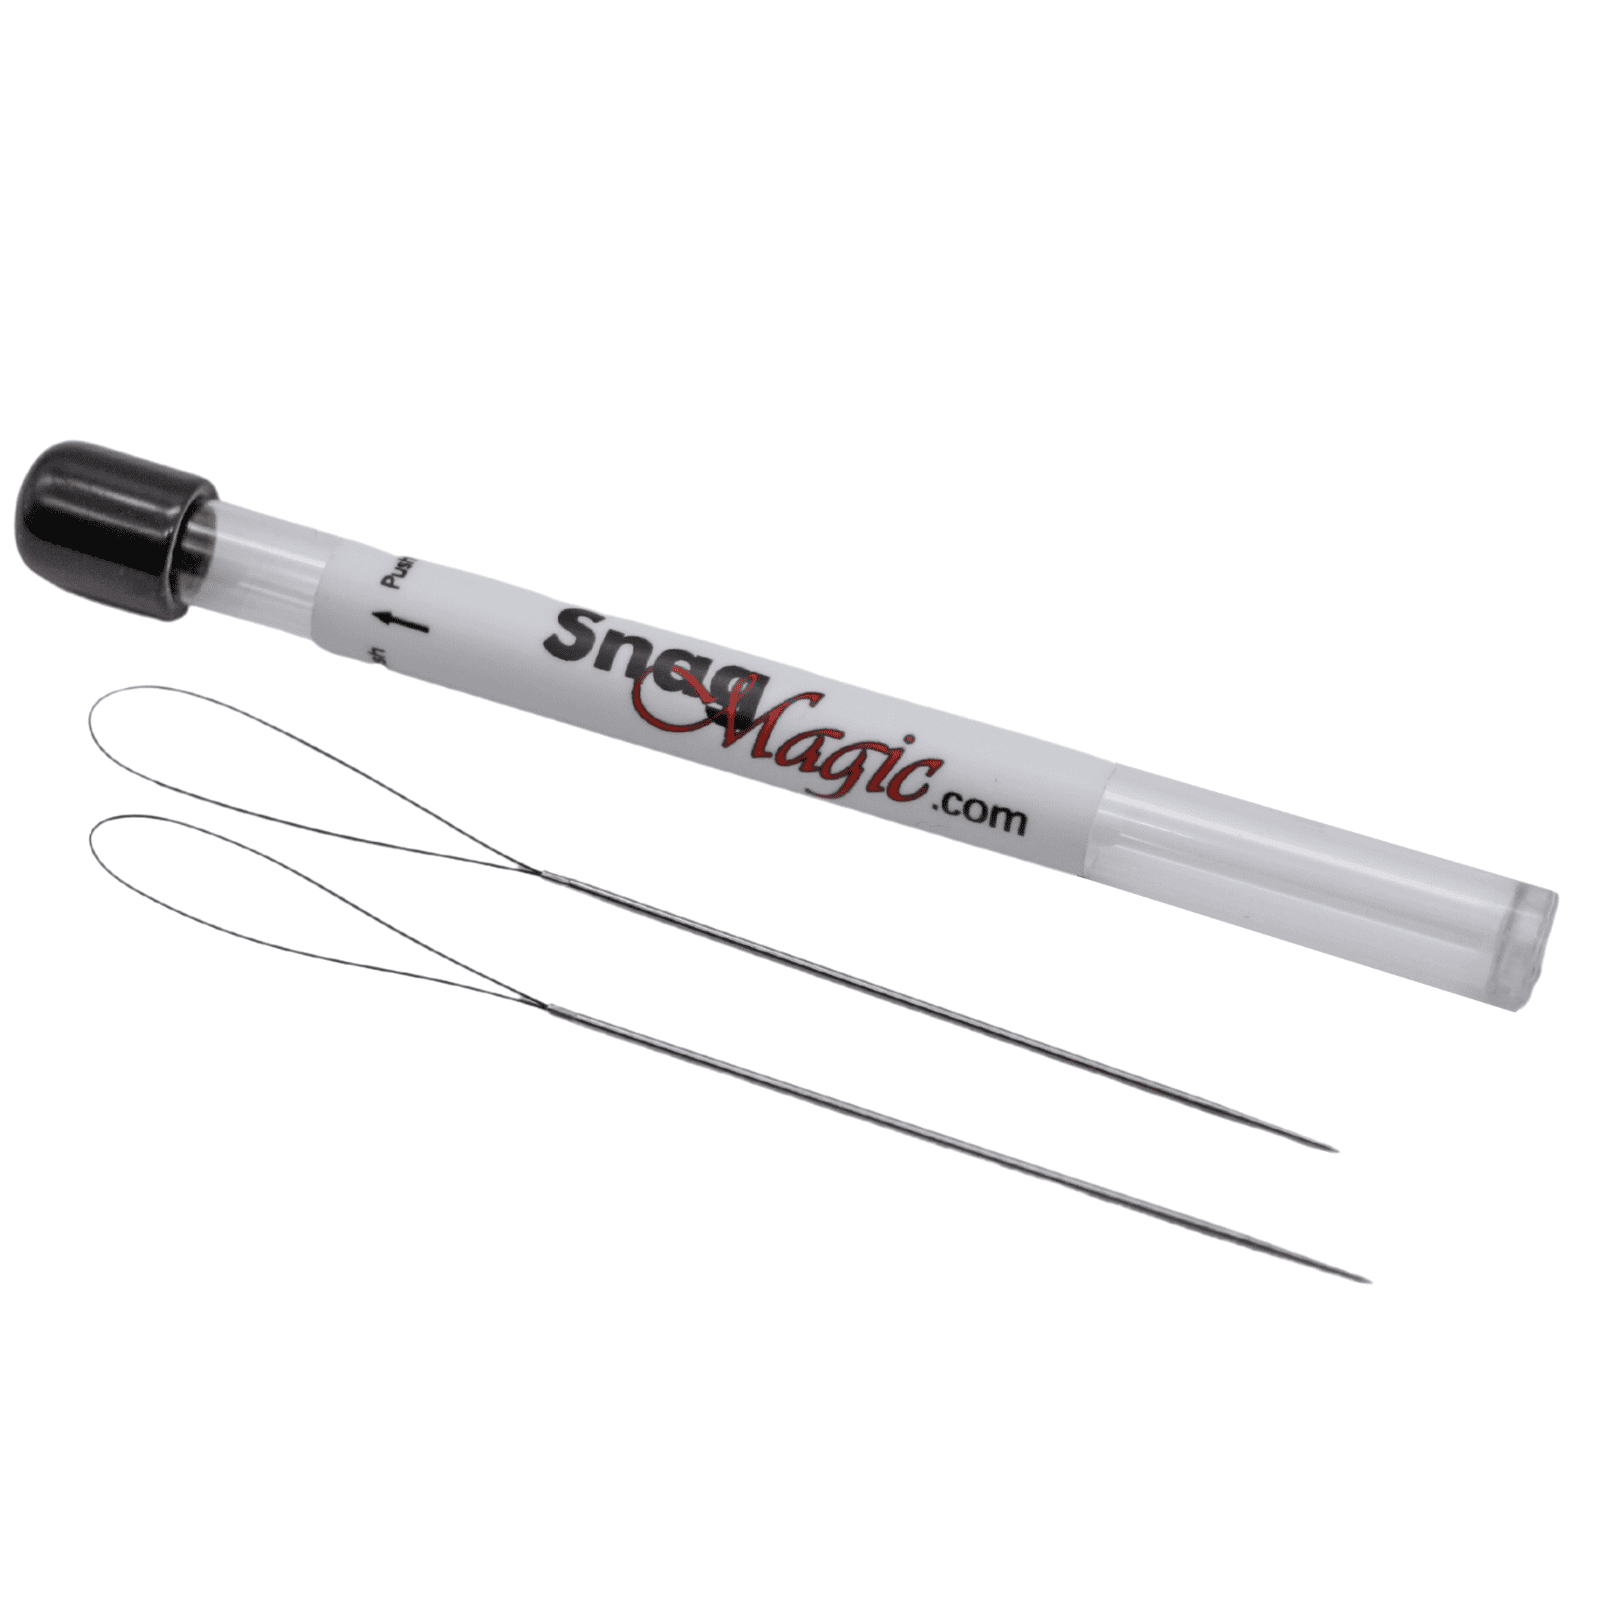 Snag Magic Needles - Sewing & Quilting Repair Tools 